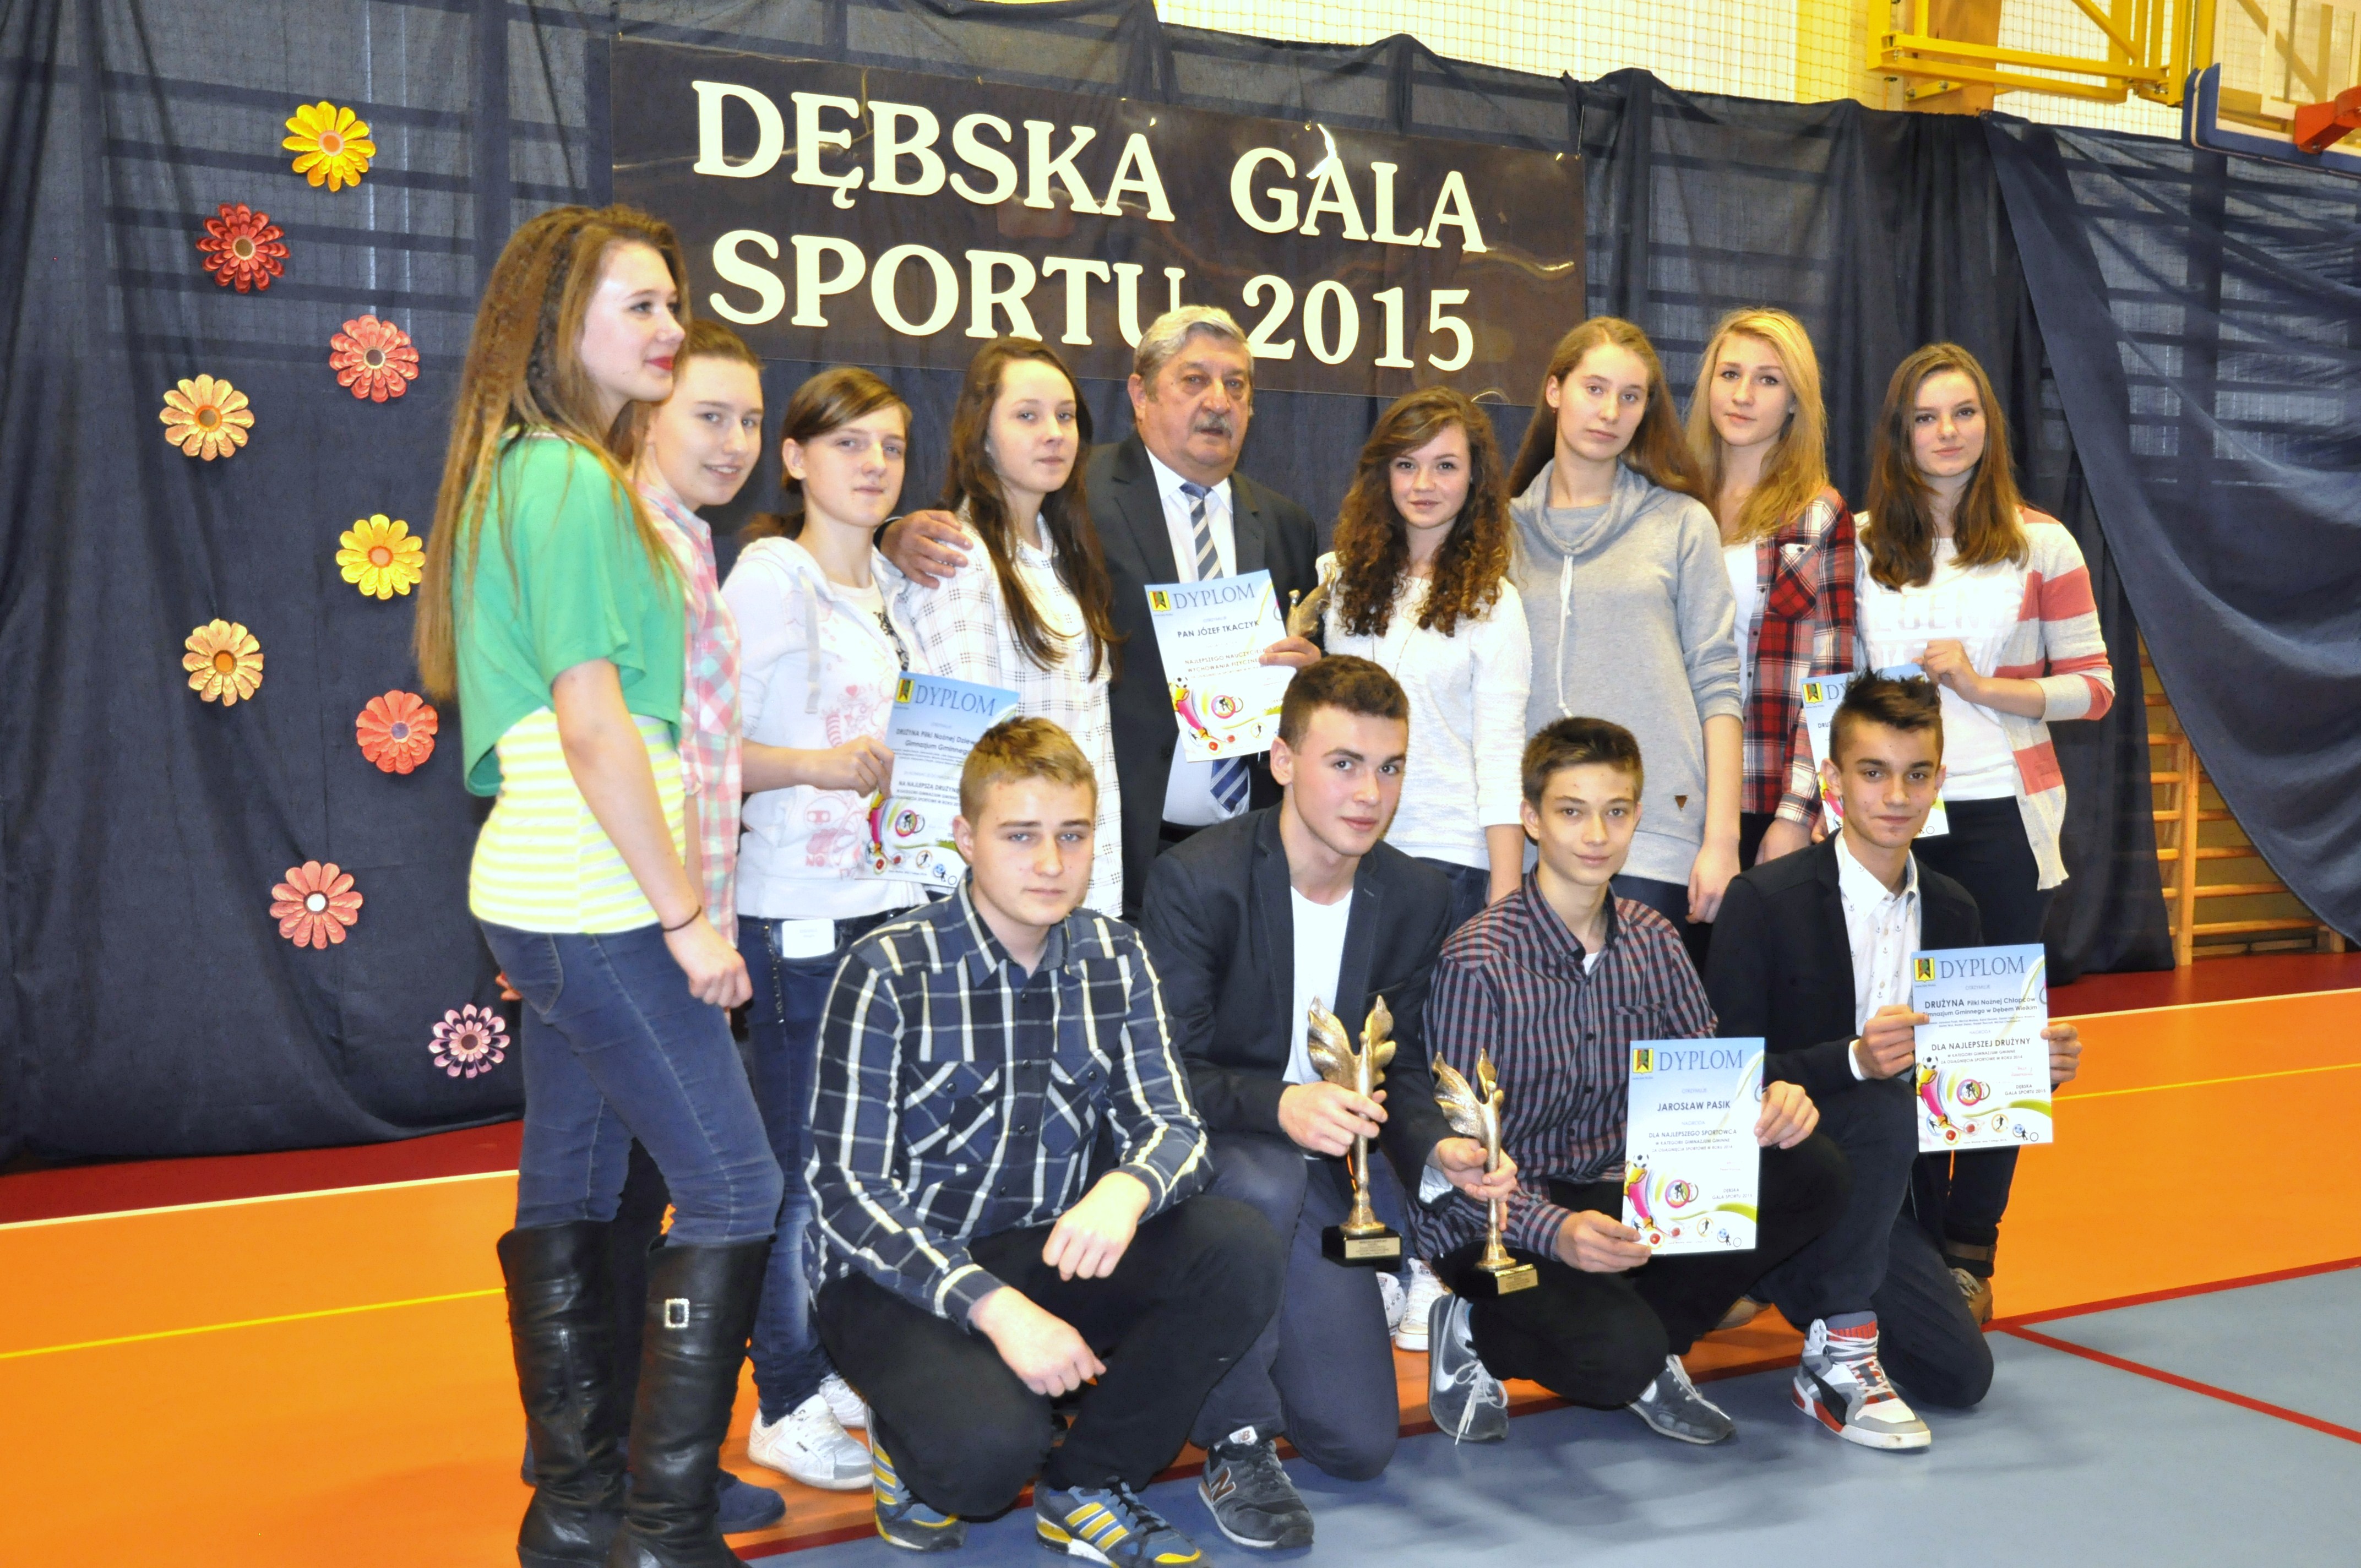 Dbska gala sportu 2015 / Worki talentw